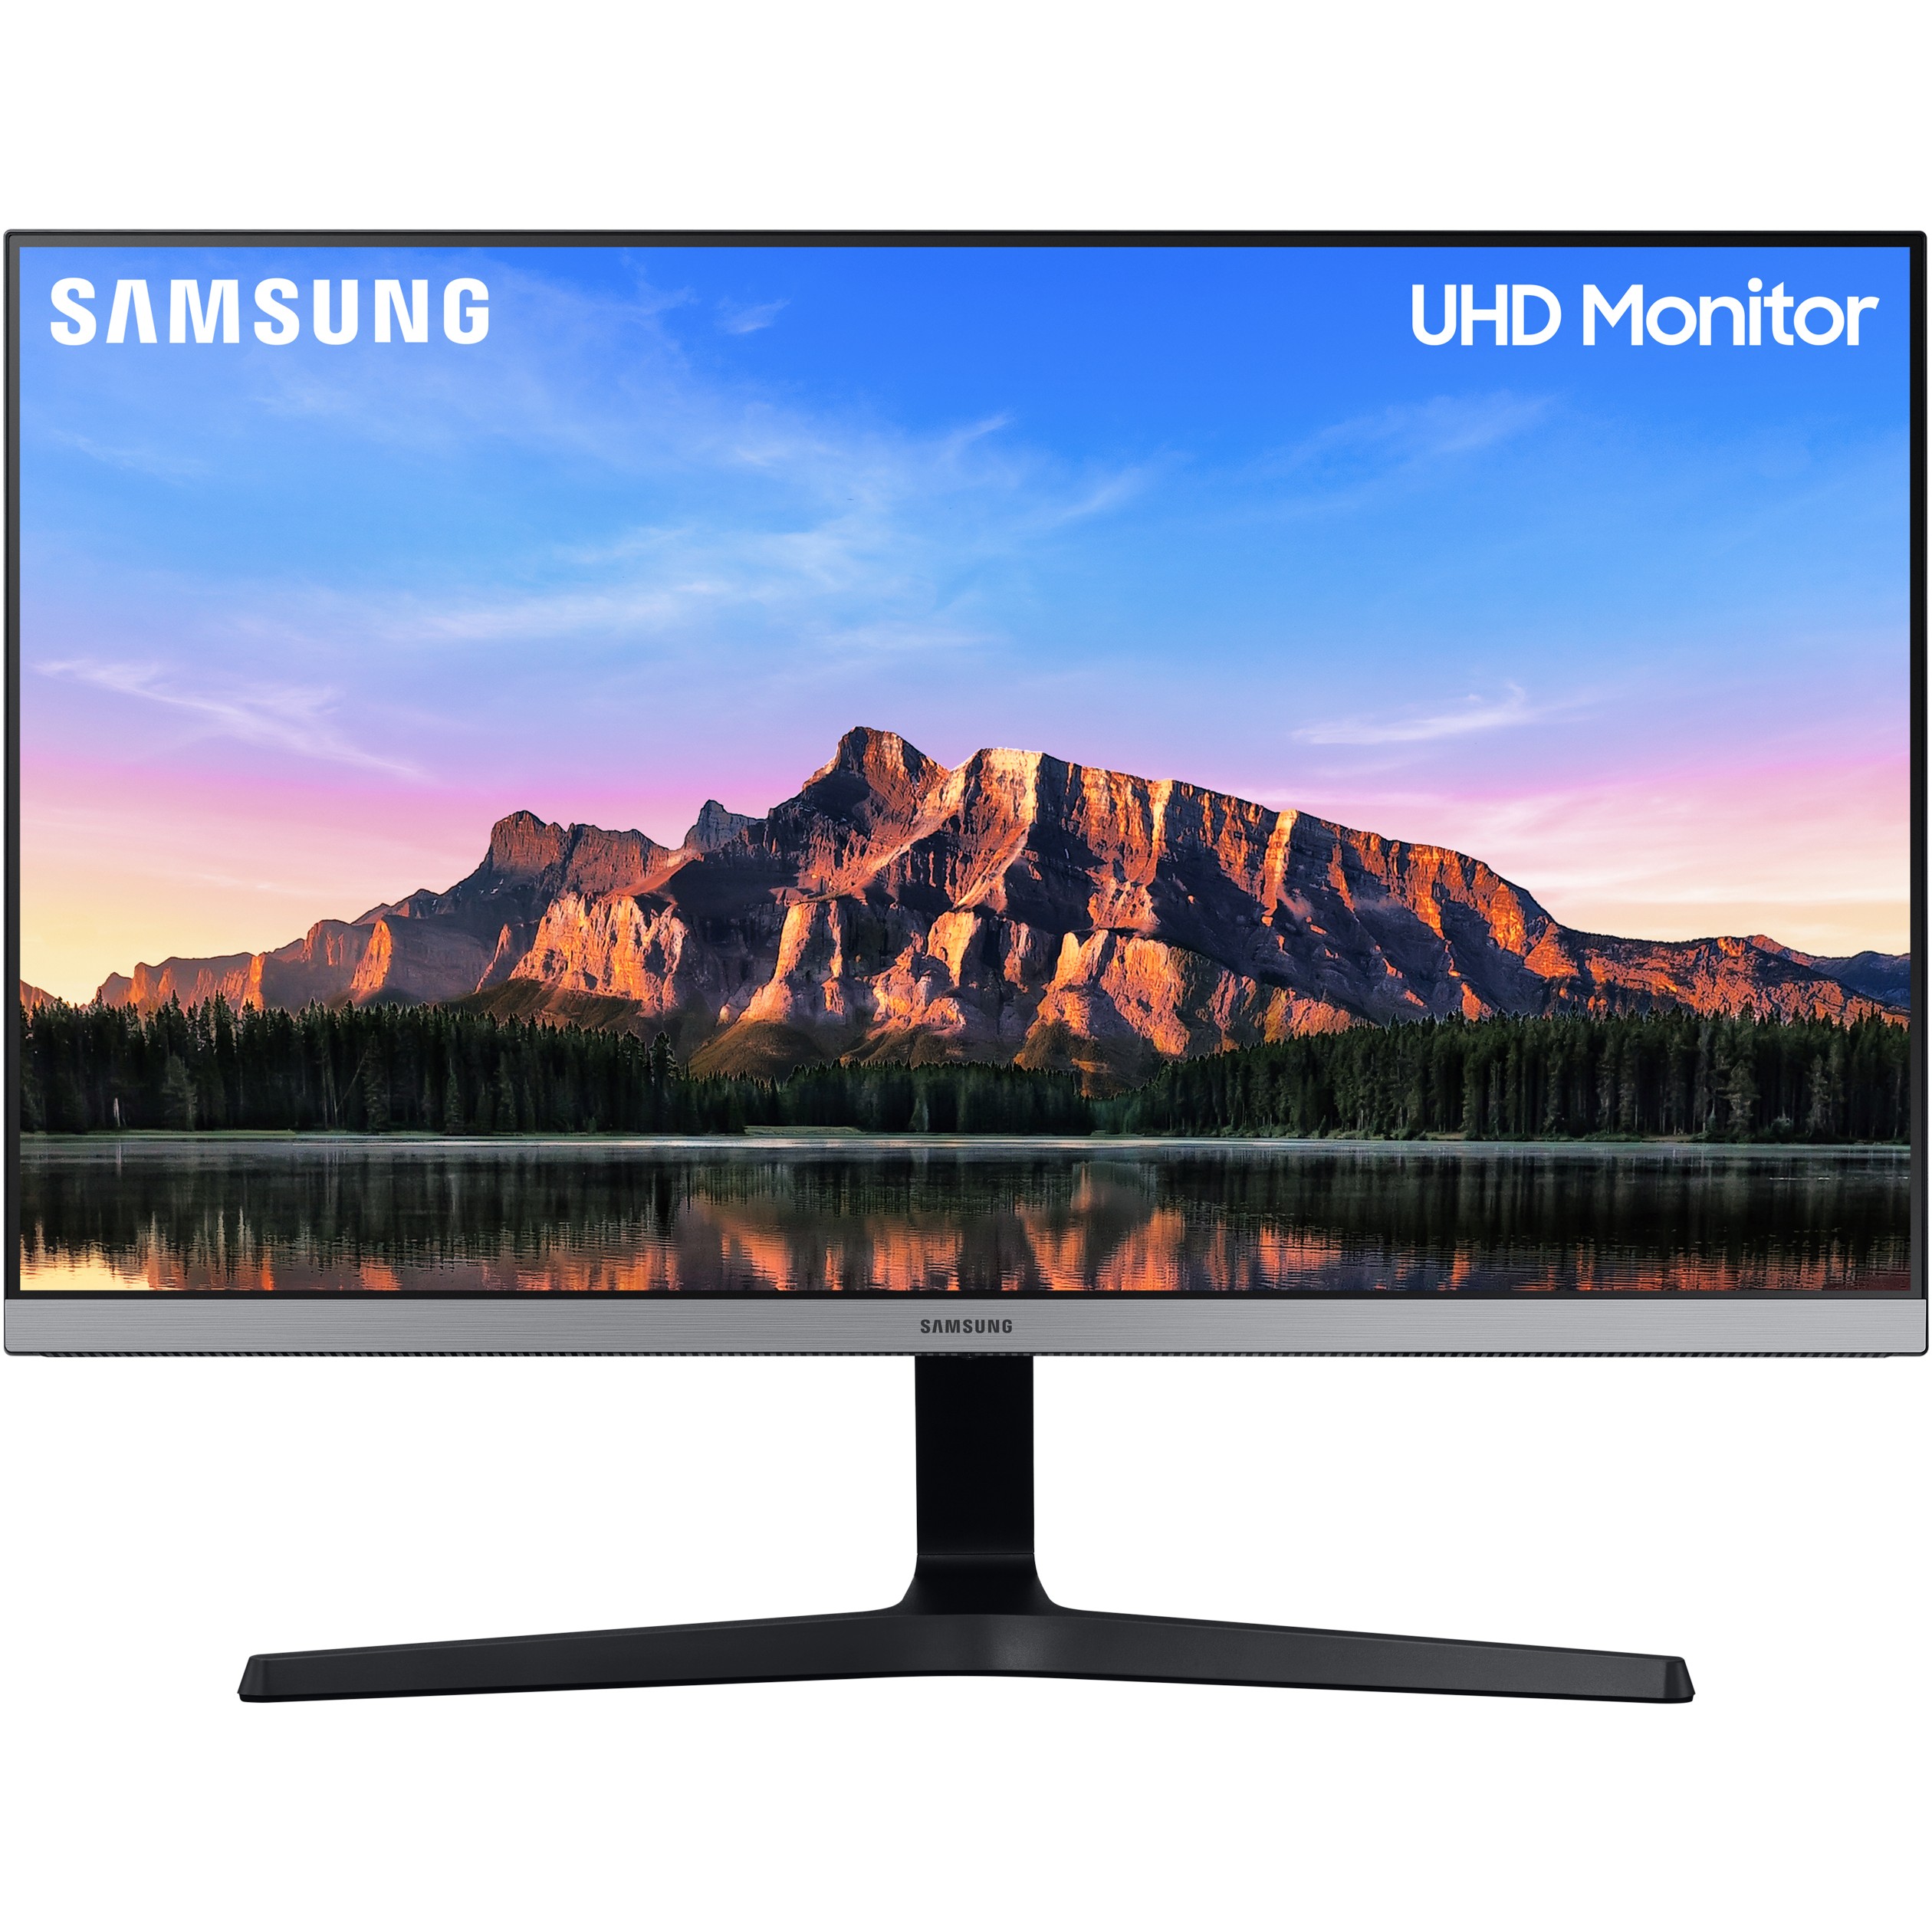 Samsung UR55 computer monitor